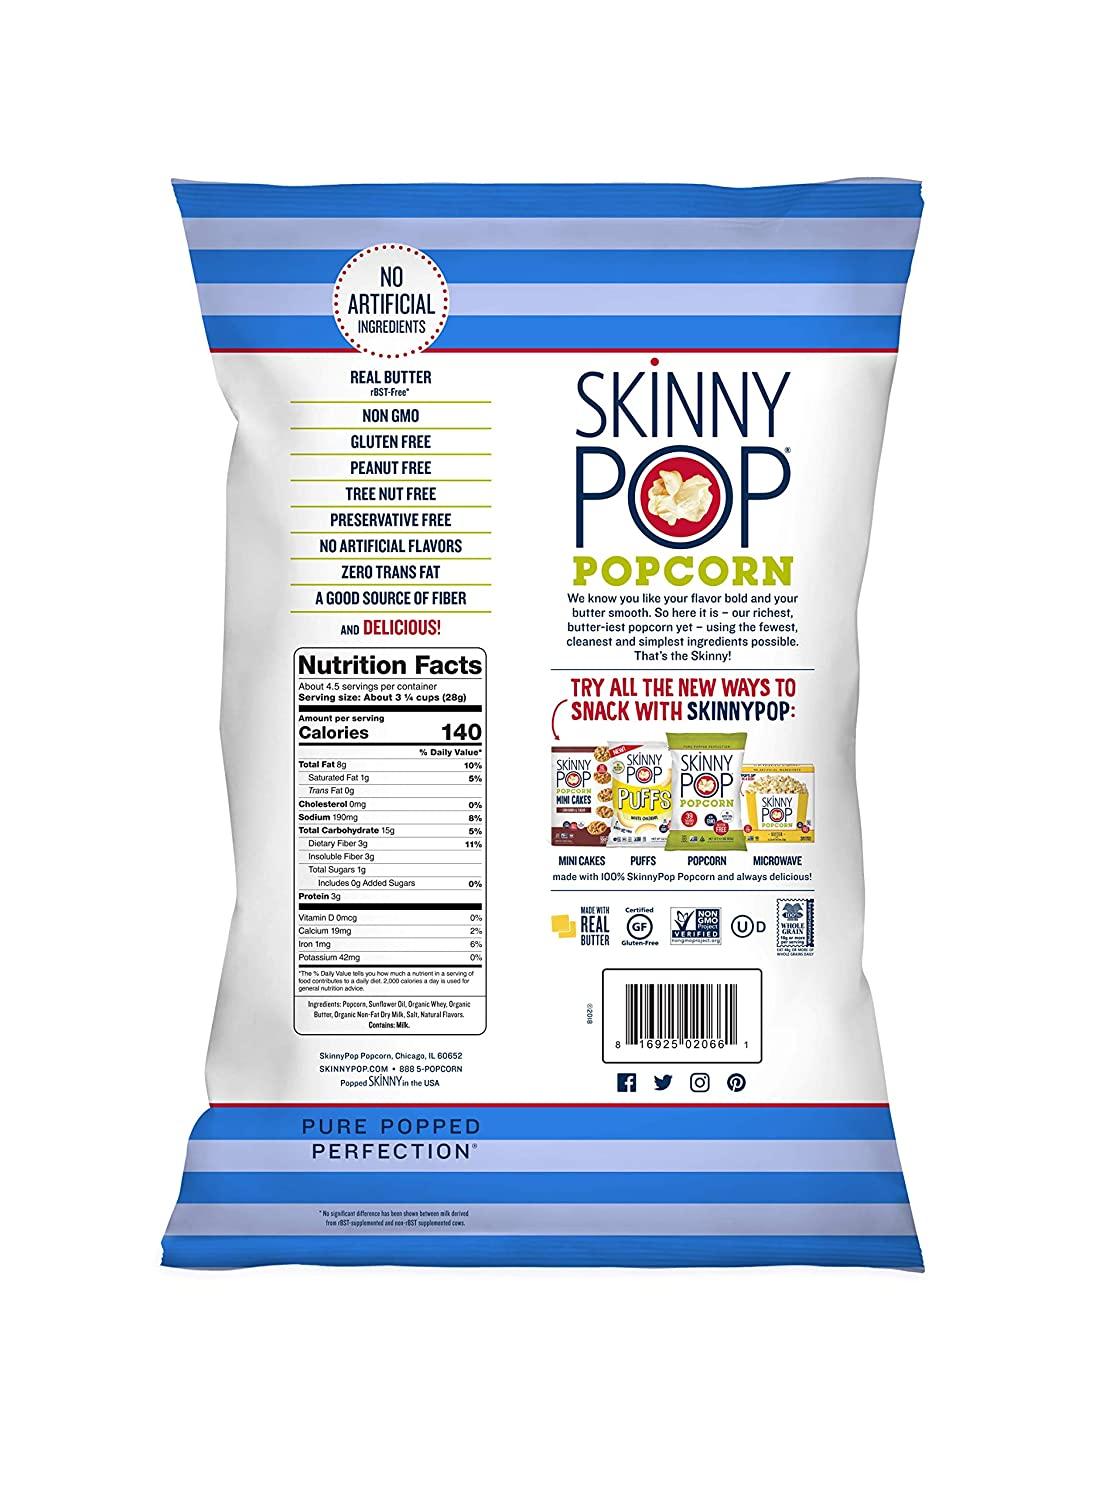 SkinnyPop Butter Popcorn, Gluten Free, Non-GMO, Healthy Popcorn Snacks,  Easter Snacks, Skinny Pop, 4.4oz Grocery Size Bag 4.4 Ounce (Pack of 1)